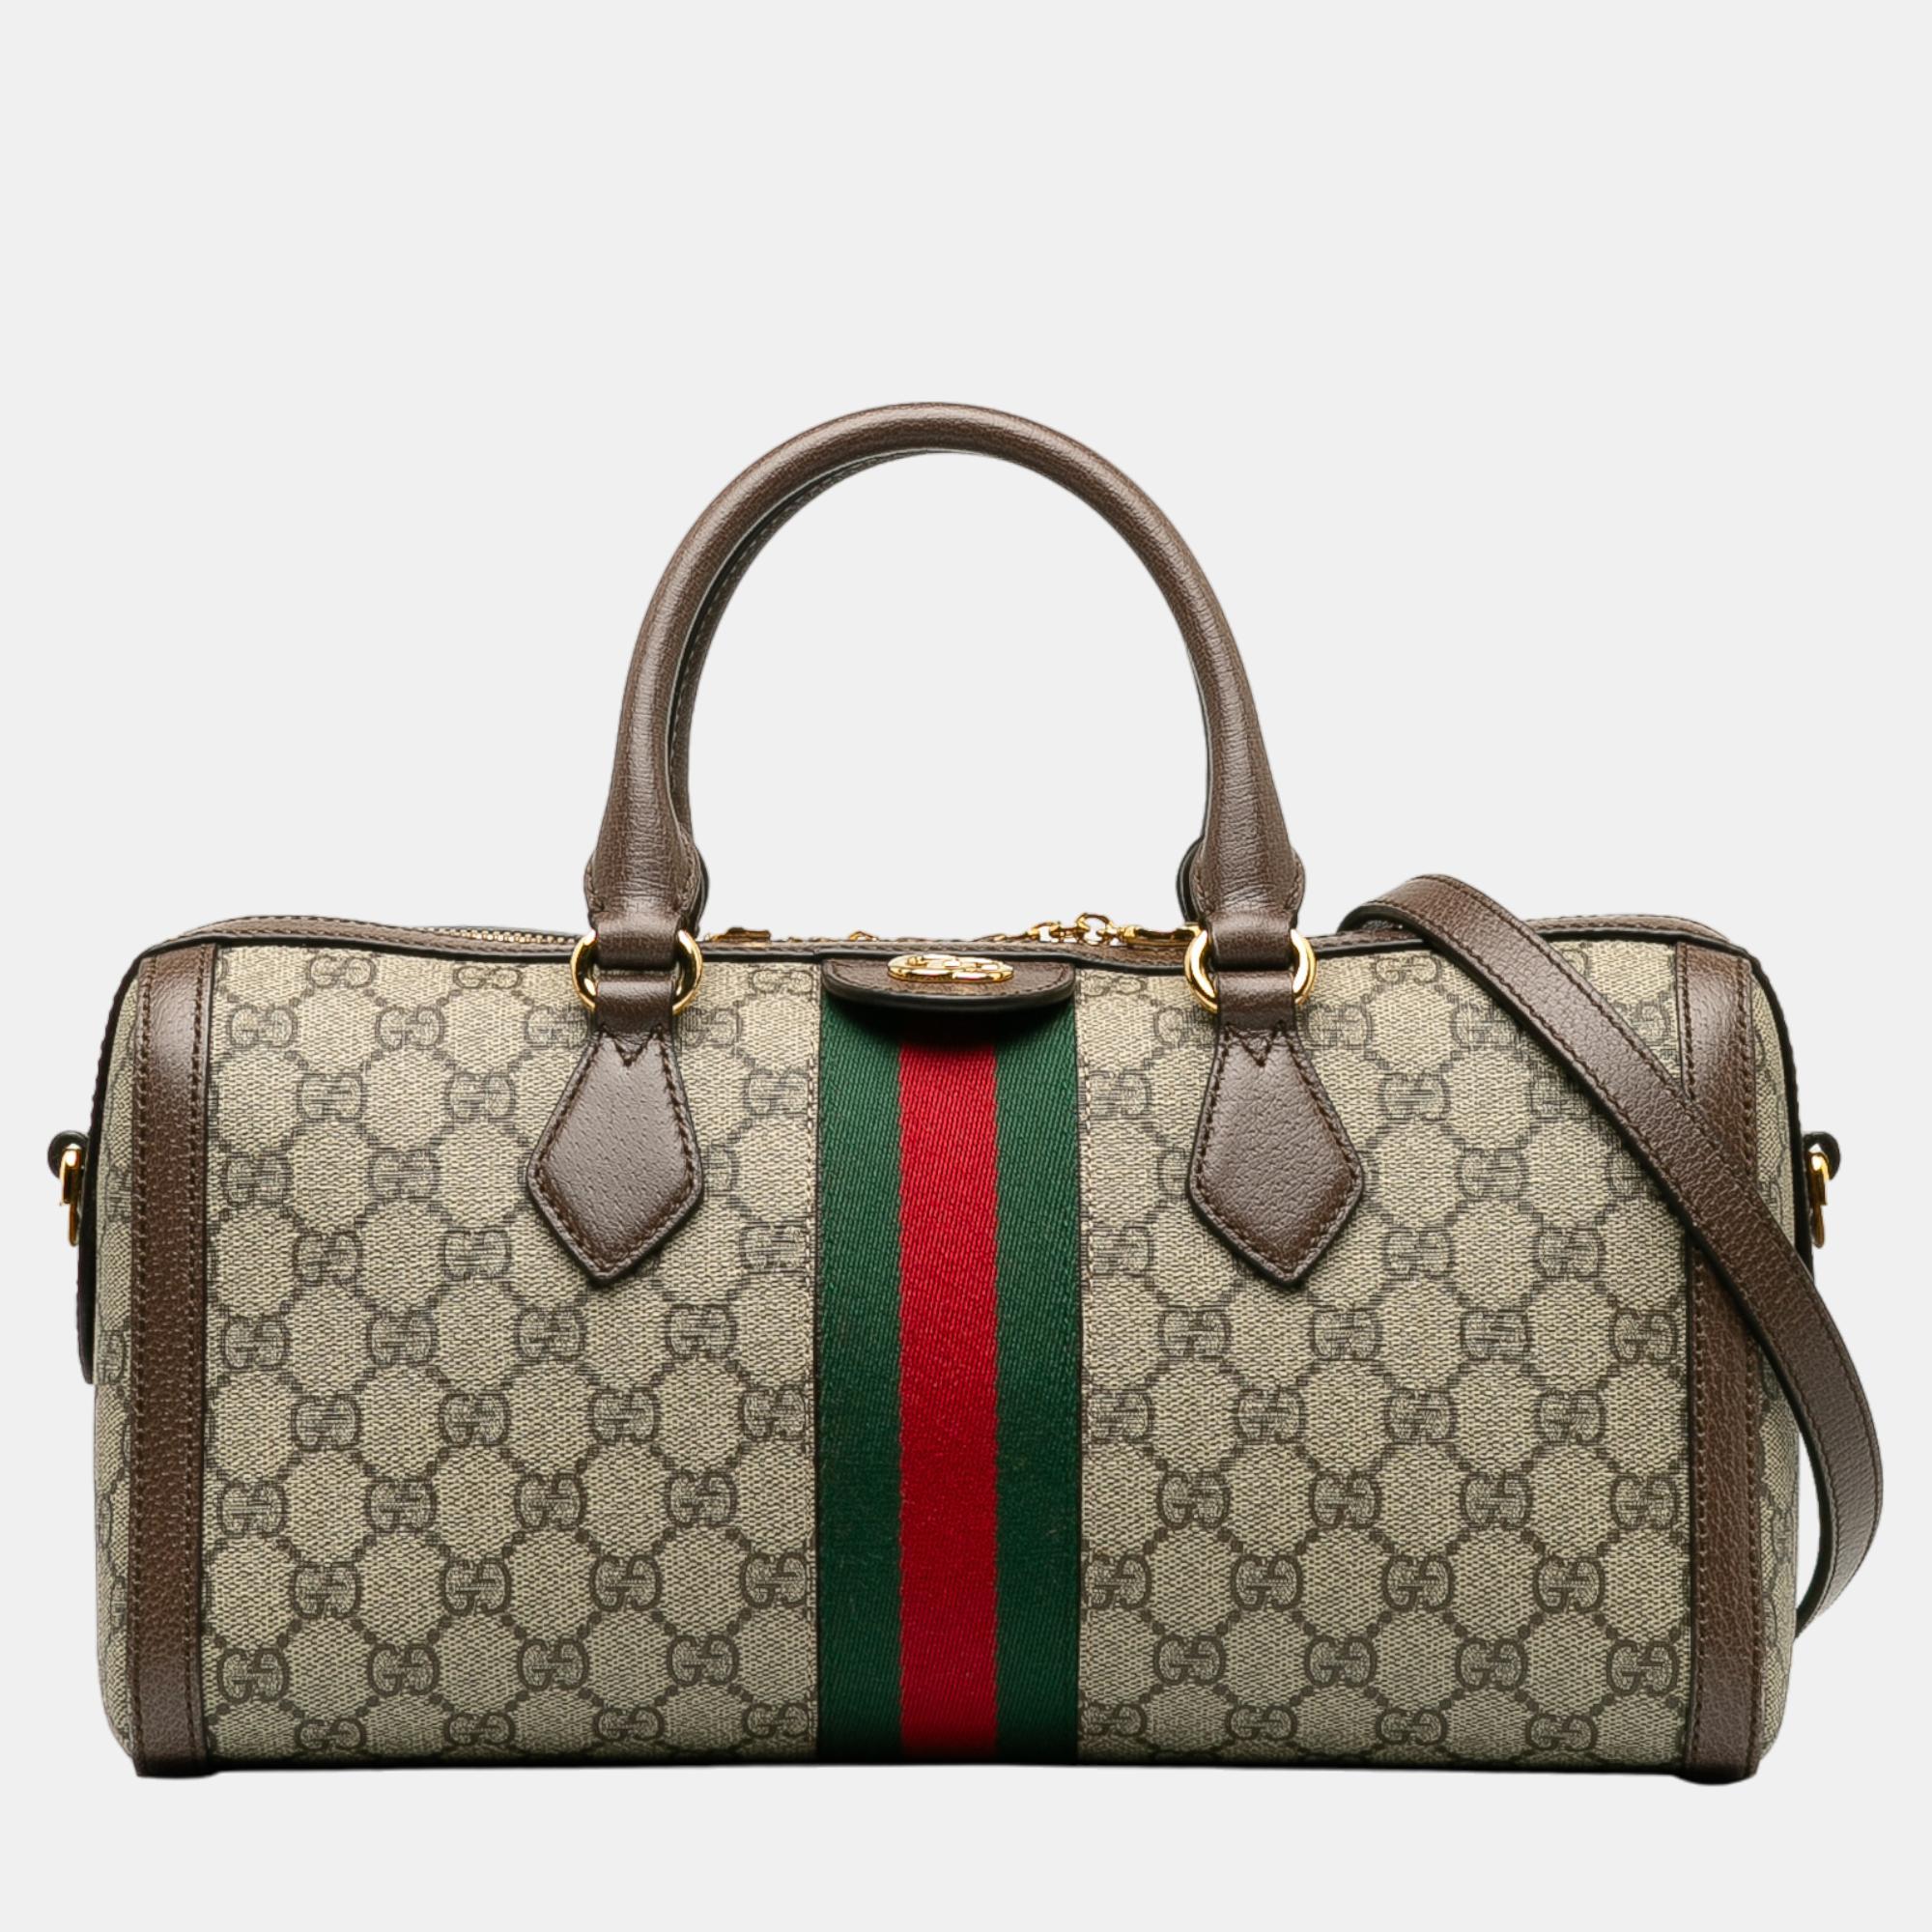 Gucci beige/brown gg supreme ophidia web satchel